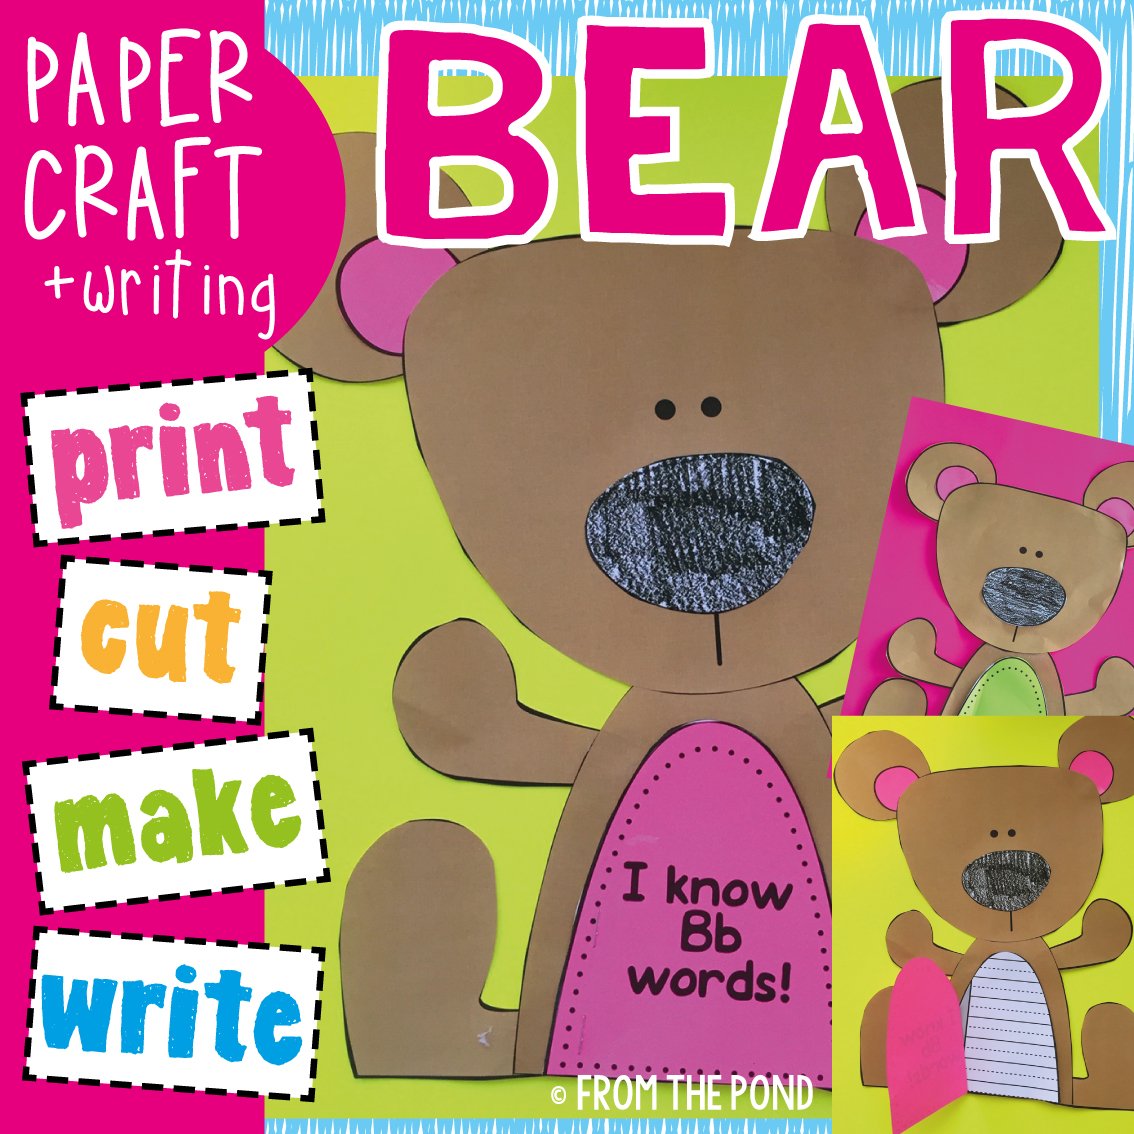 Bear Craft